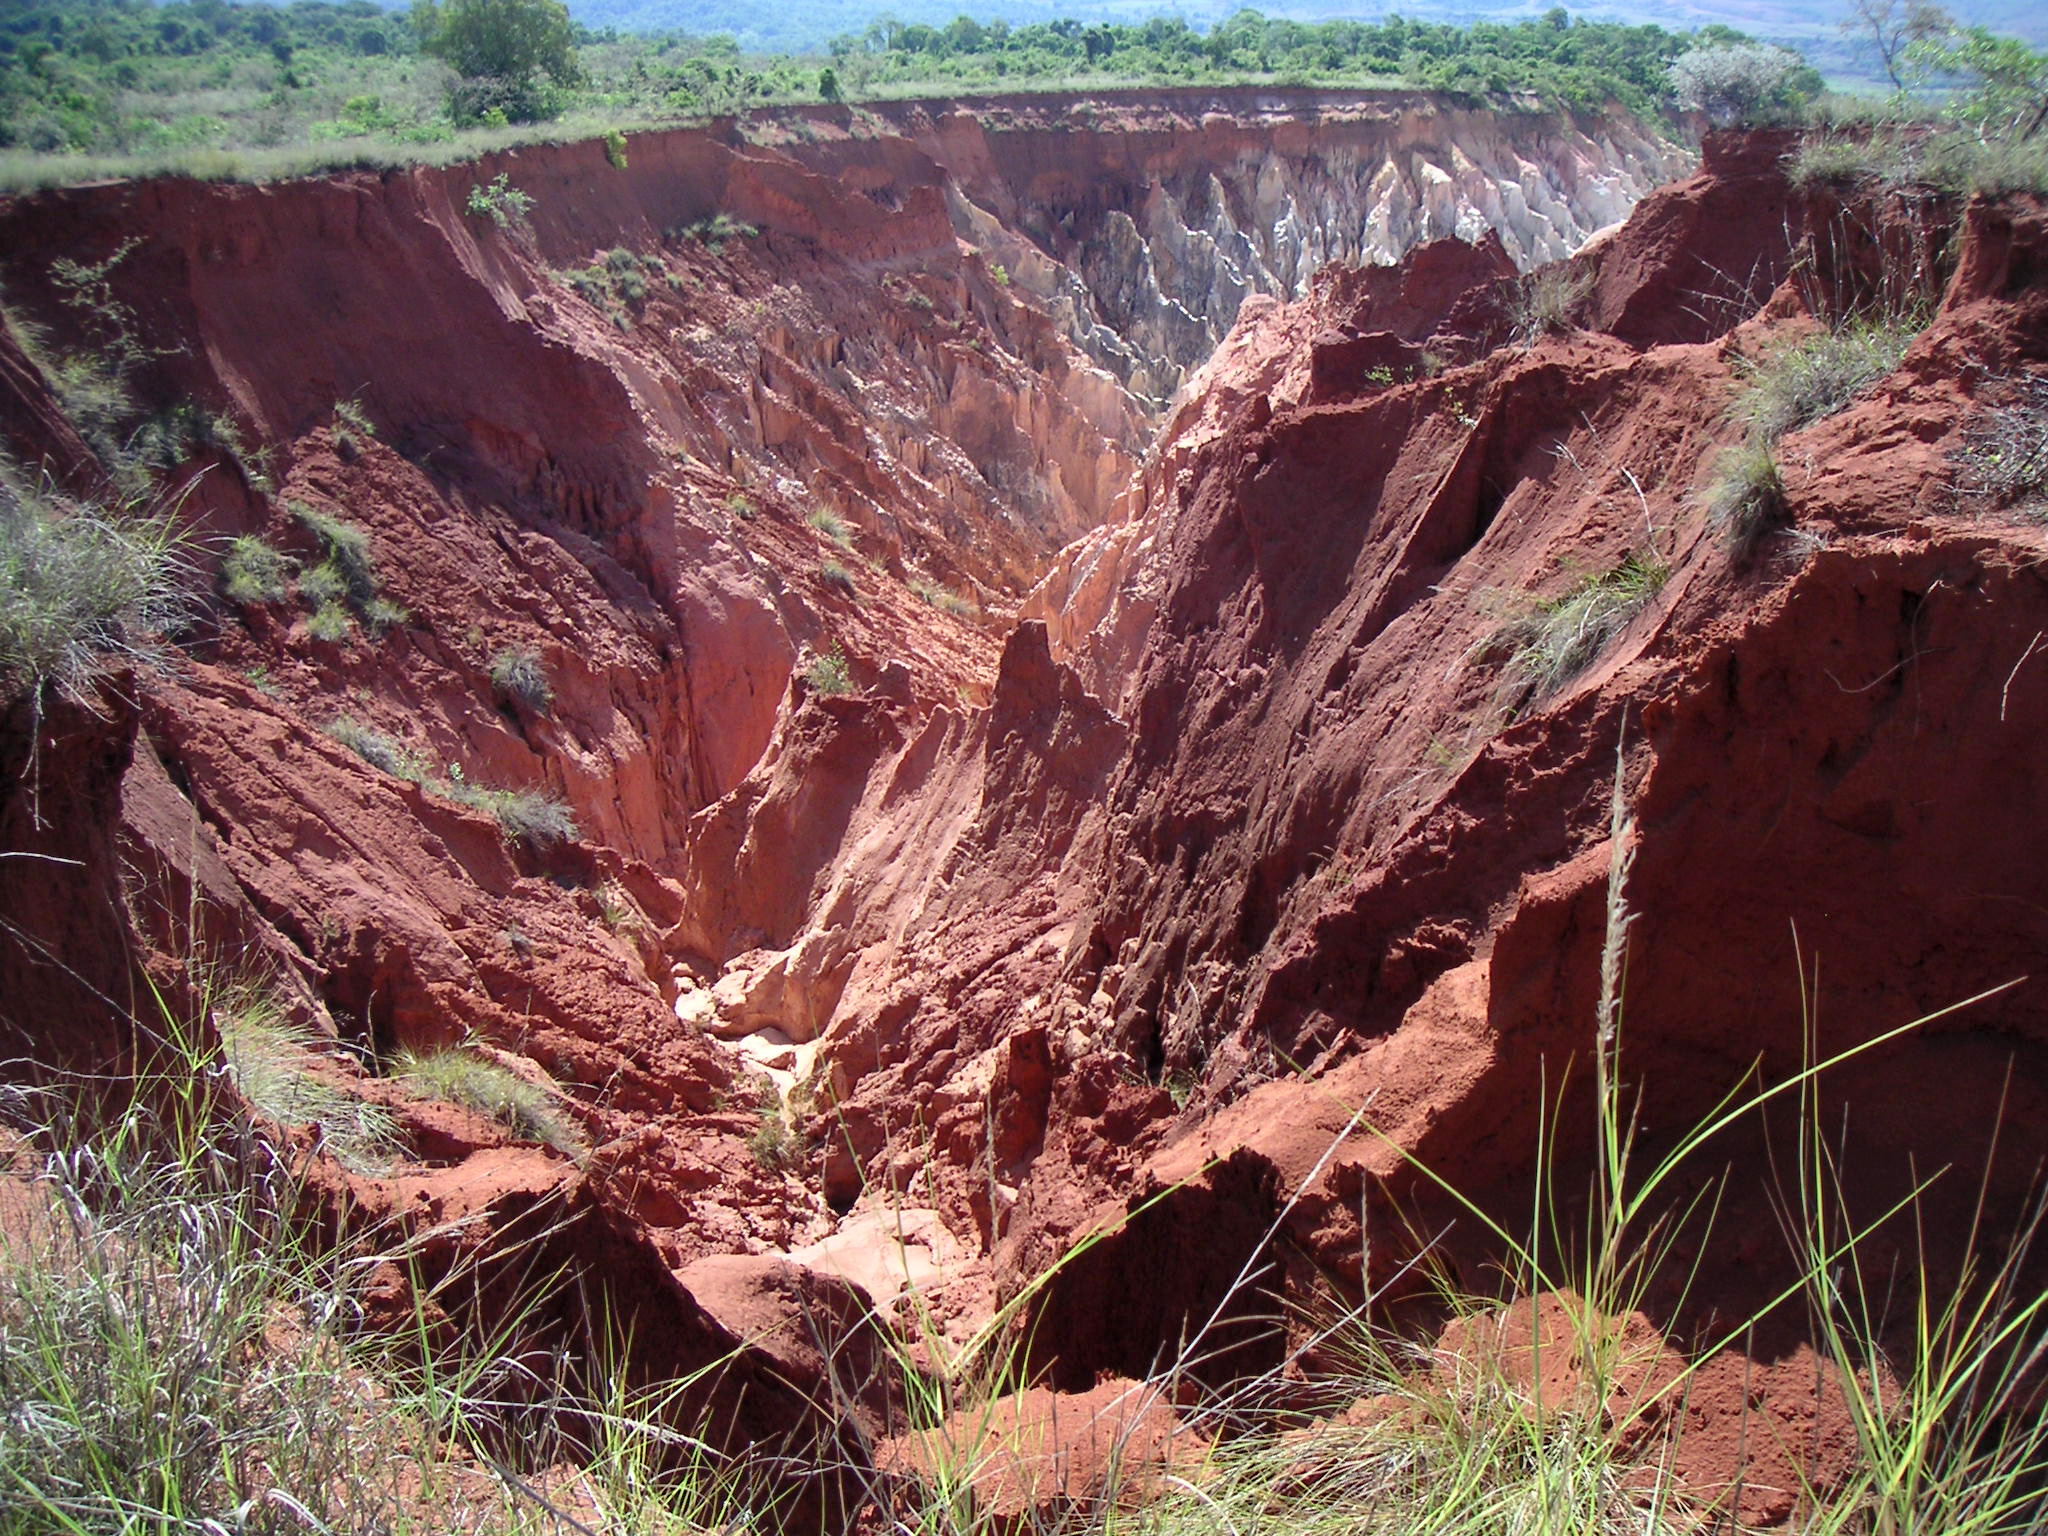 File:Madagascar erosion.jpg